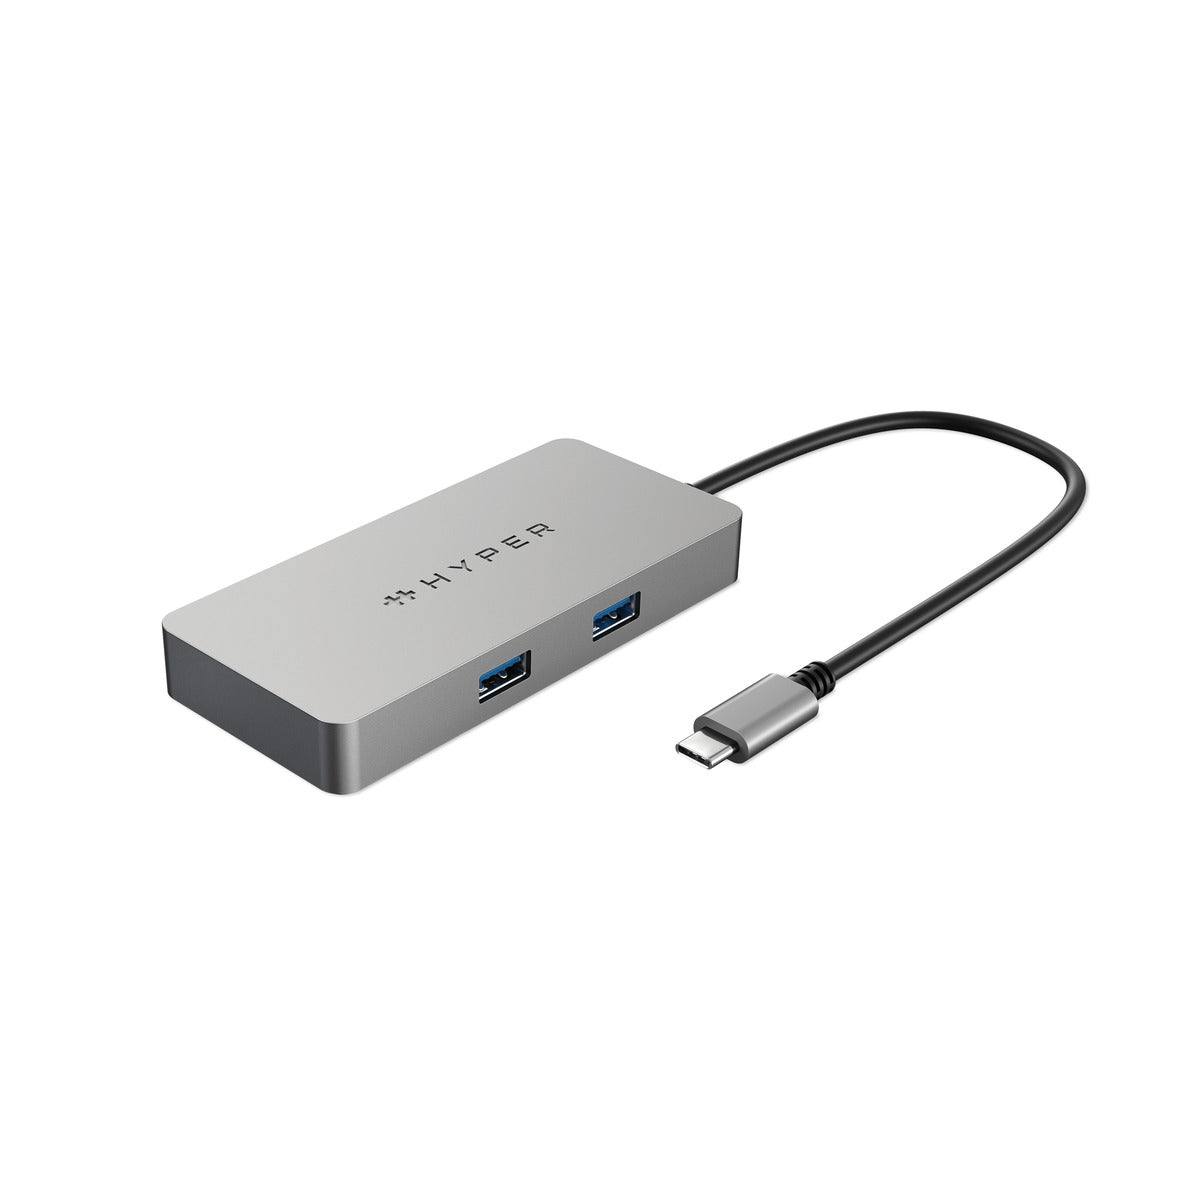 Hyperdrive 5 Port USB-C Hub